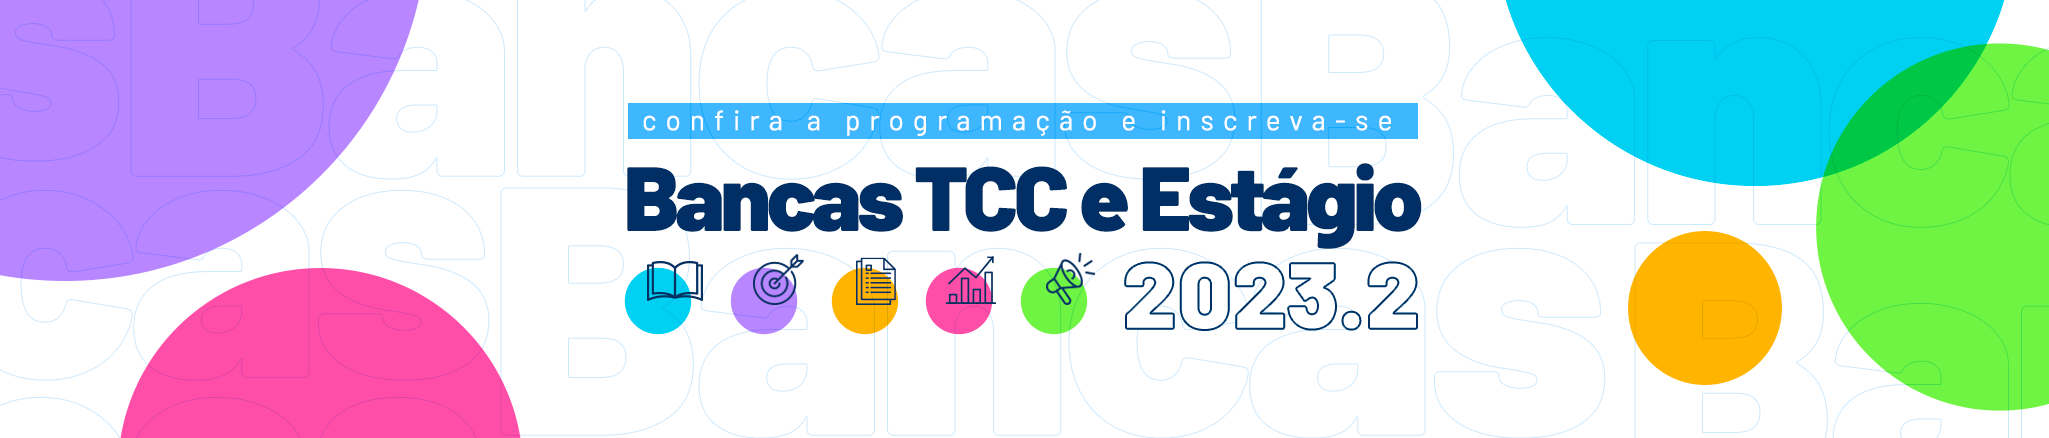 Banner-desktop-Banner-Bancas-de-TCC-e-Estágio-2023-2